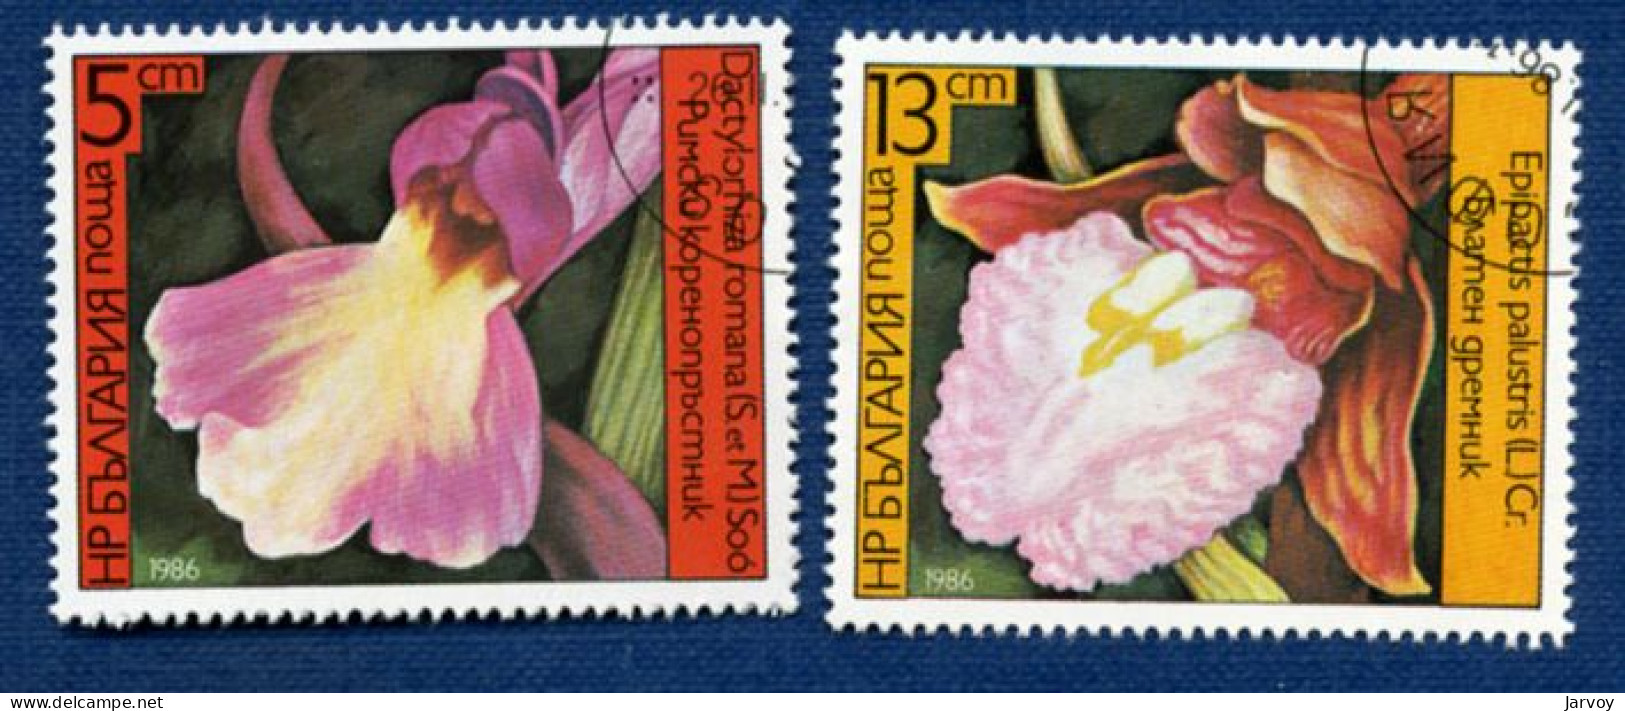 Bulgarie 1956 à 1988, Fruits, légumes, fleurs (19 timbres - o)